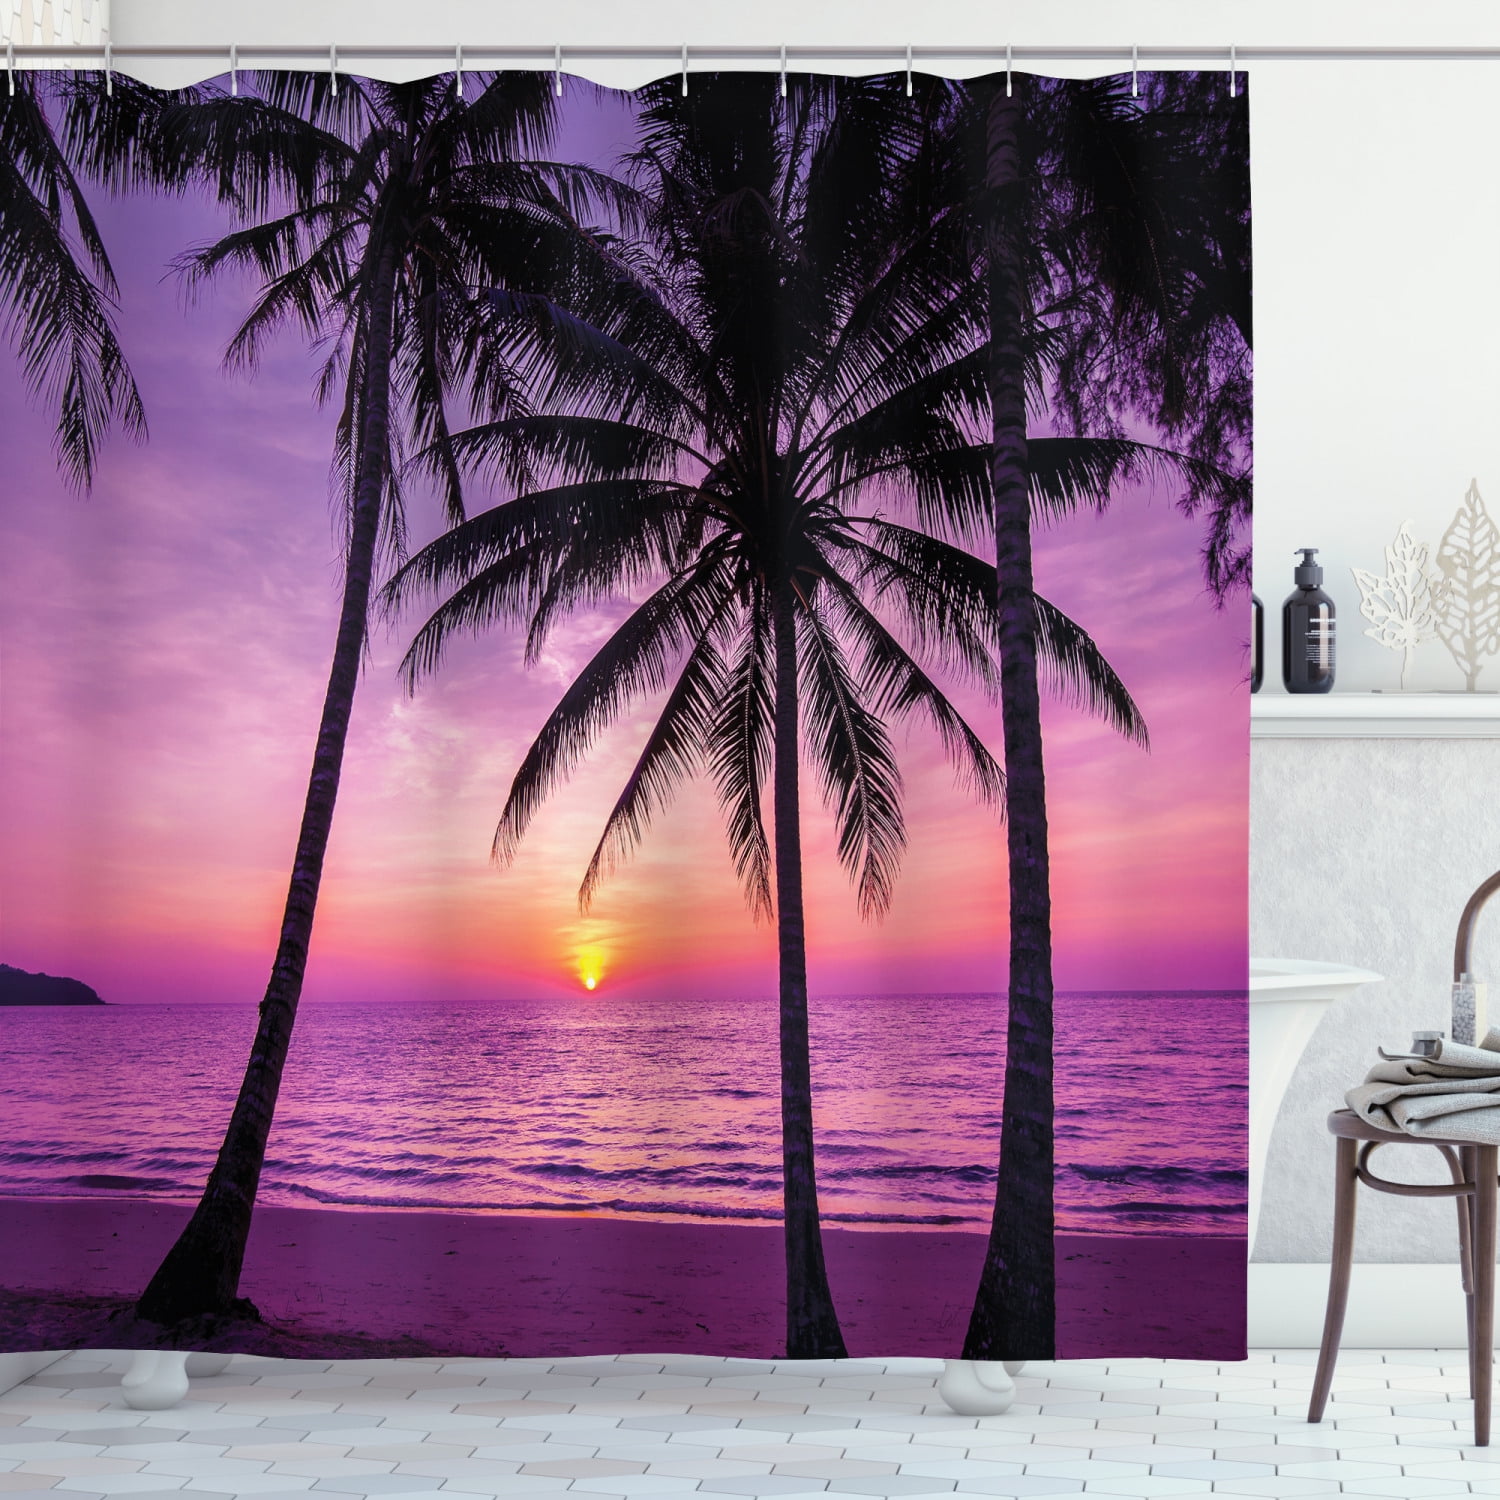 Ocean Sunset Scenery Bathroom Mildew Shower Curtain 12 Hooks Waterproof Fabric 